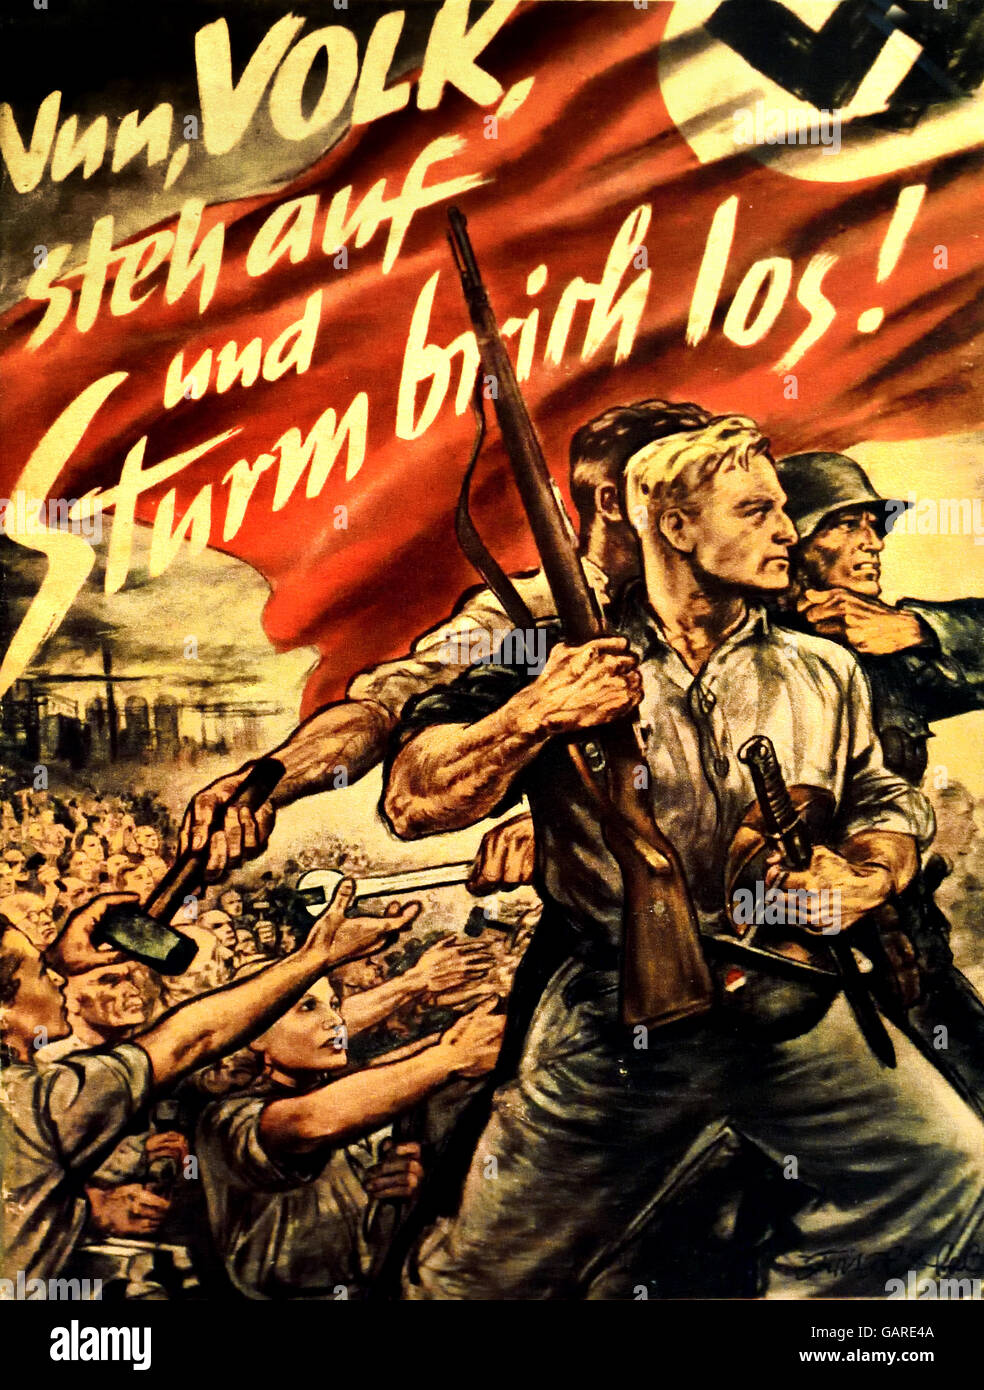 Nun, Volk steh auf und Srurm brich los ! Now, people get up and storm break loose!  Joseph Goebbels 1897-1945 Berlin Nazi Germany Stock Photo